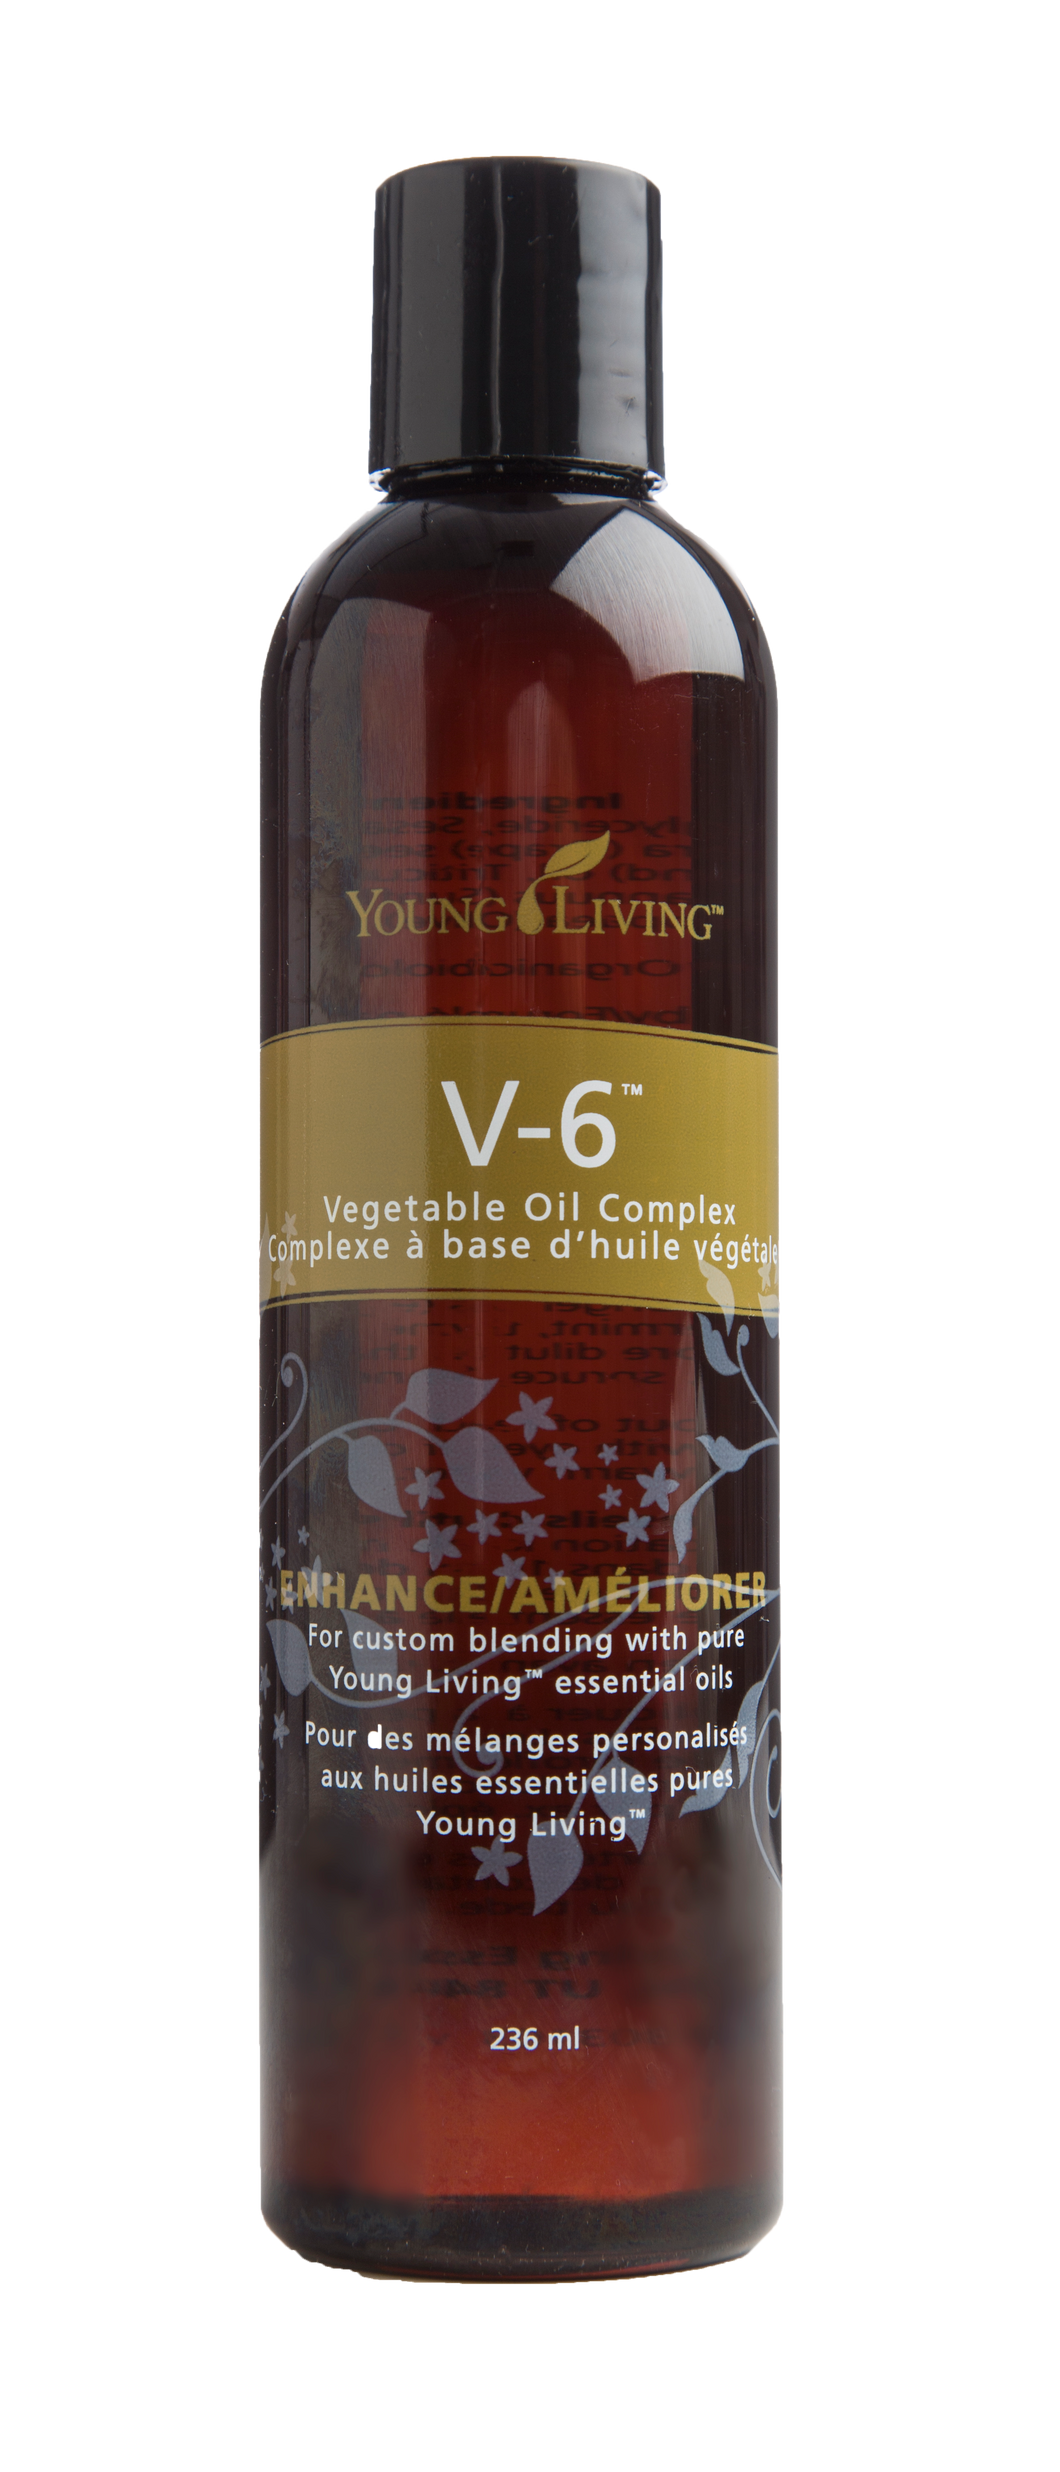 YL - Carrier Oil: V-6 Vegetable Oil Complex